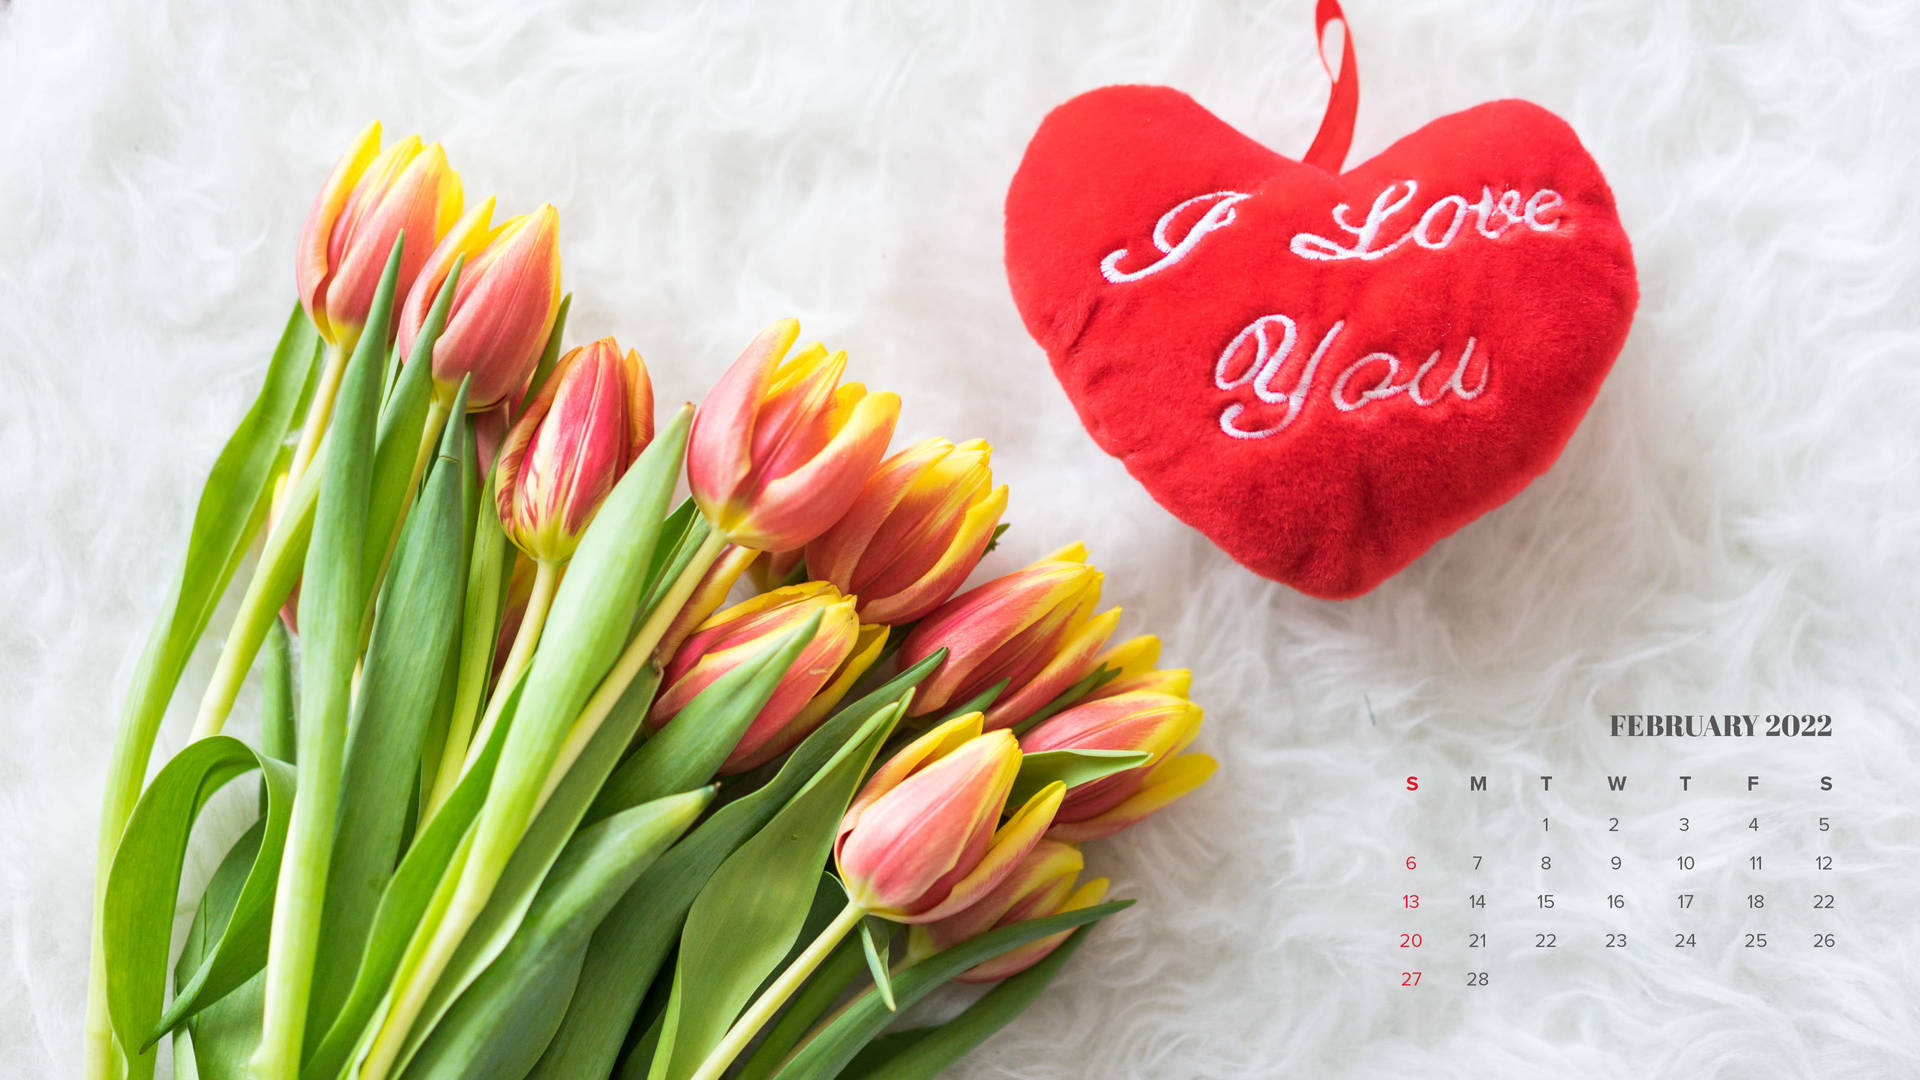 Tulips February 2022 Calendar Background